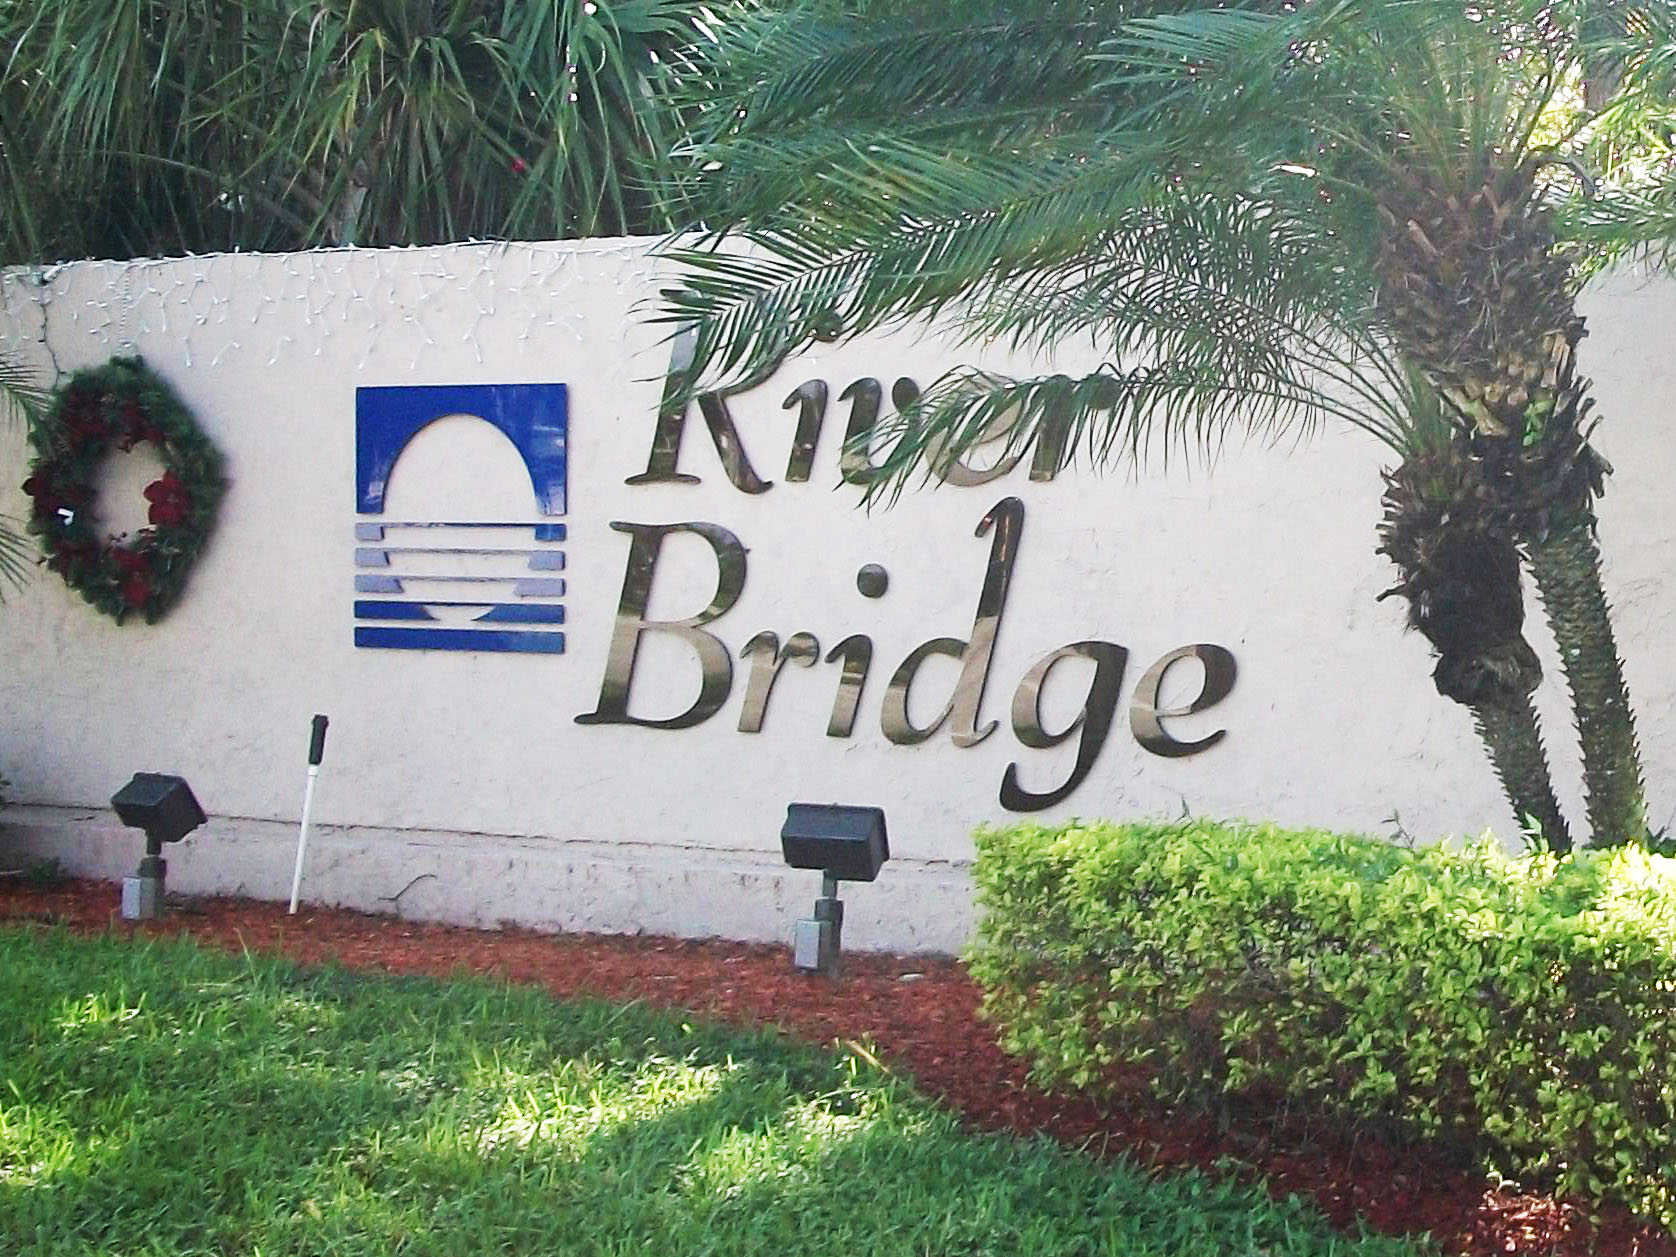 River Bridge foreclosures in West Palm Beach